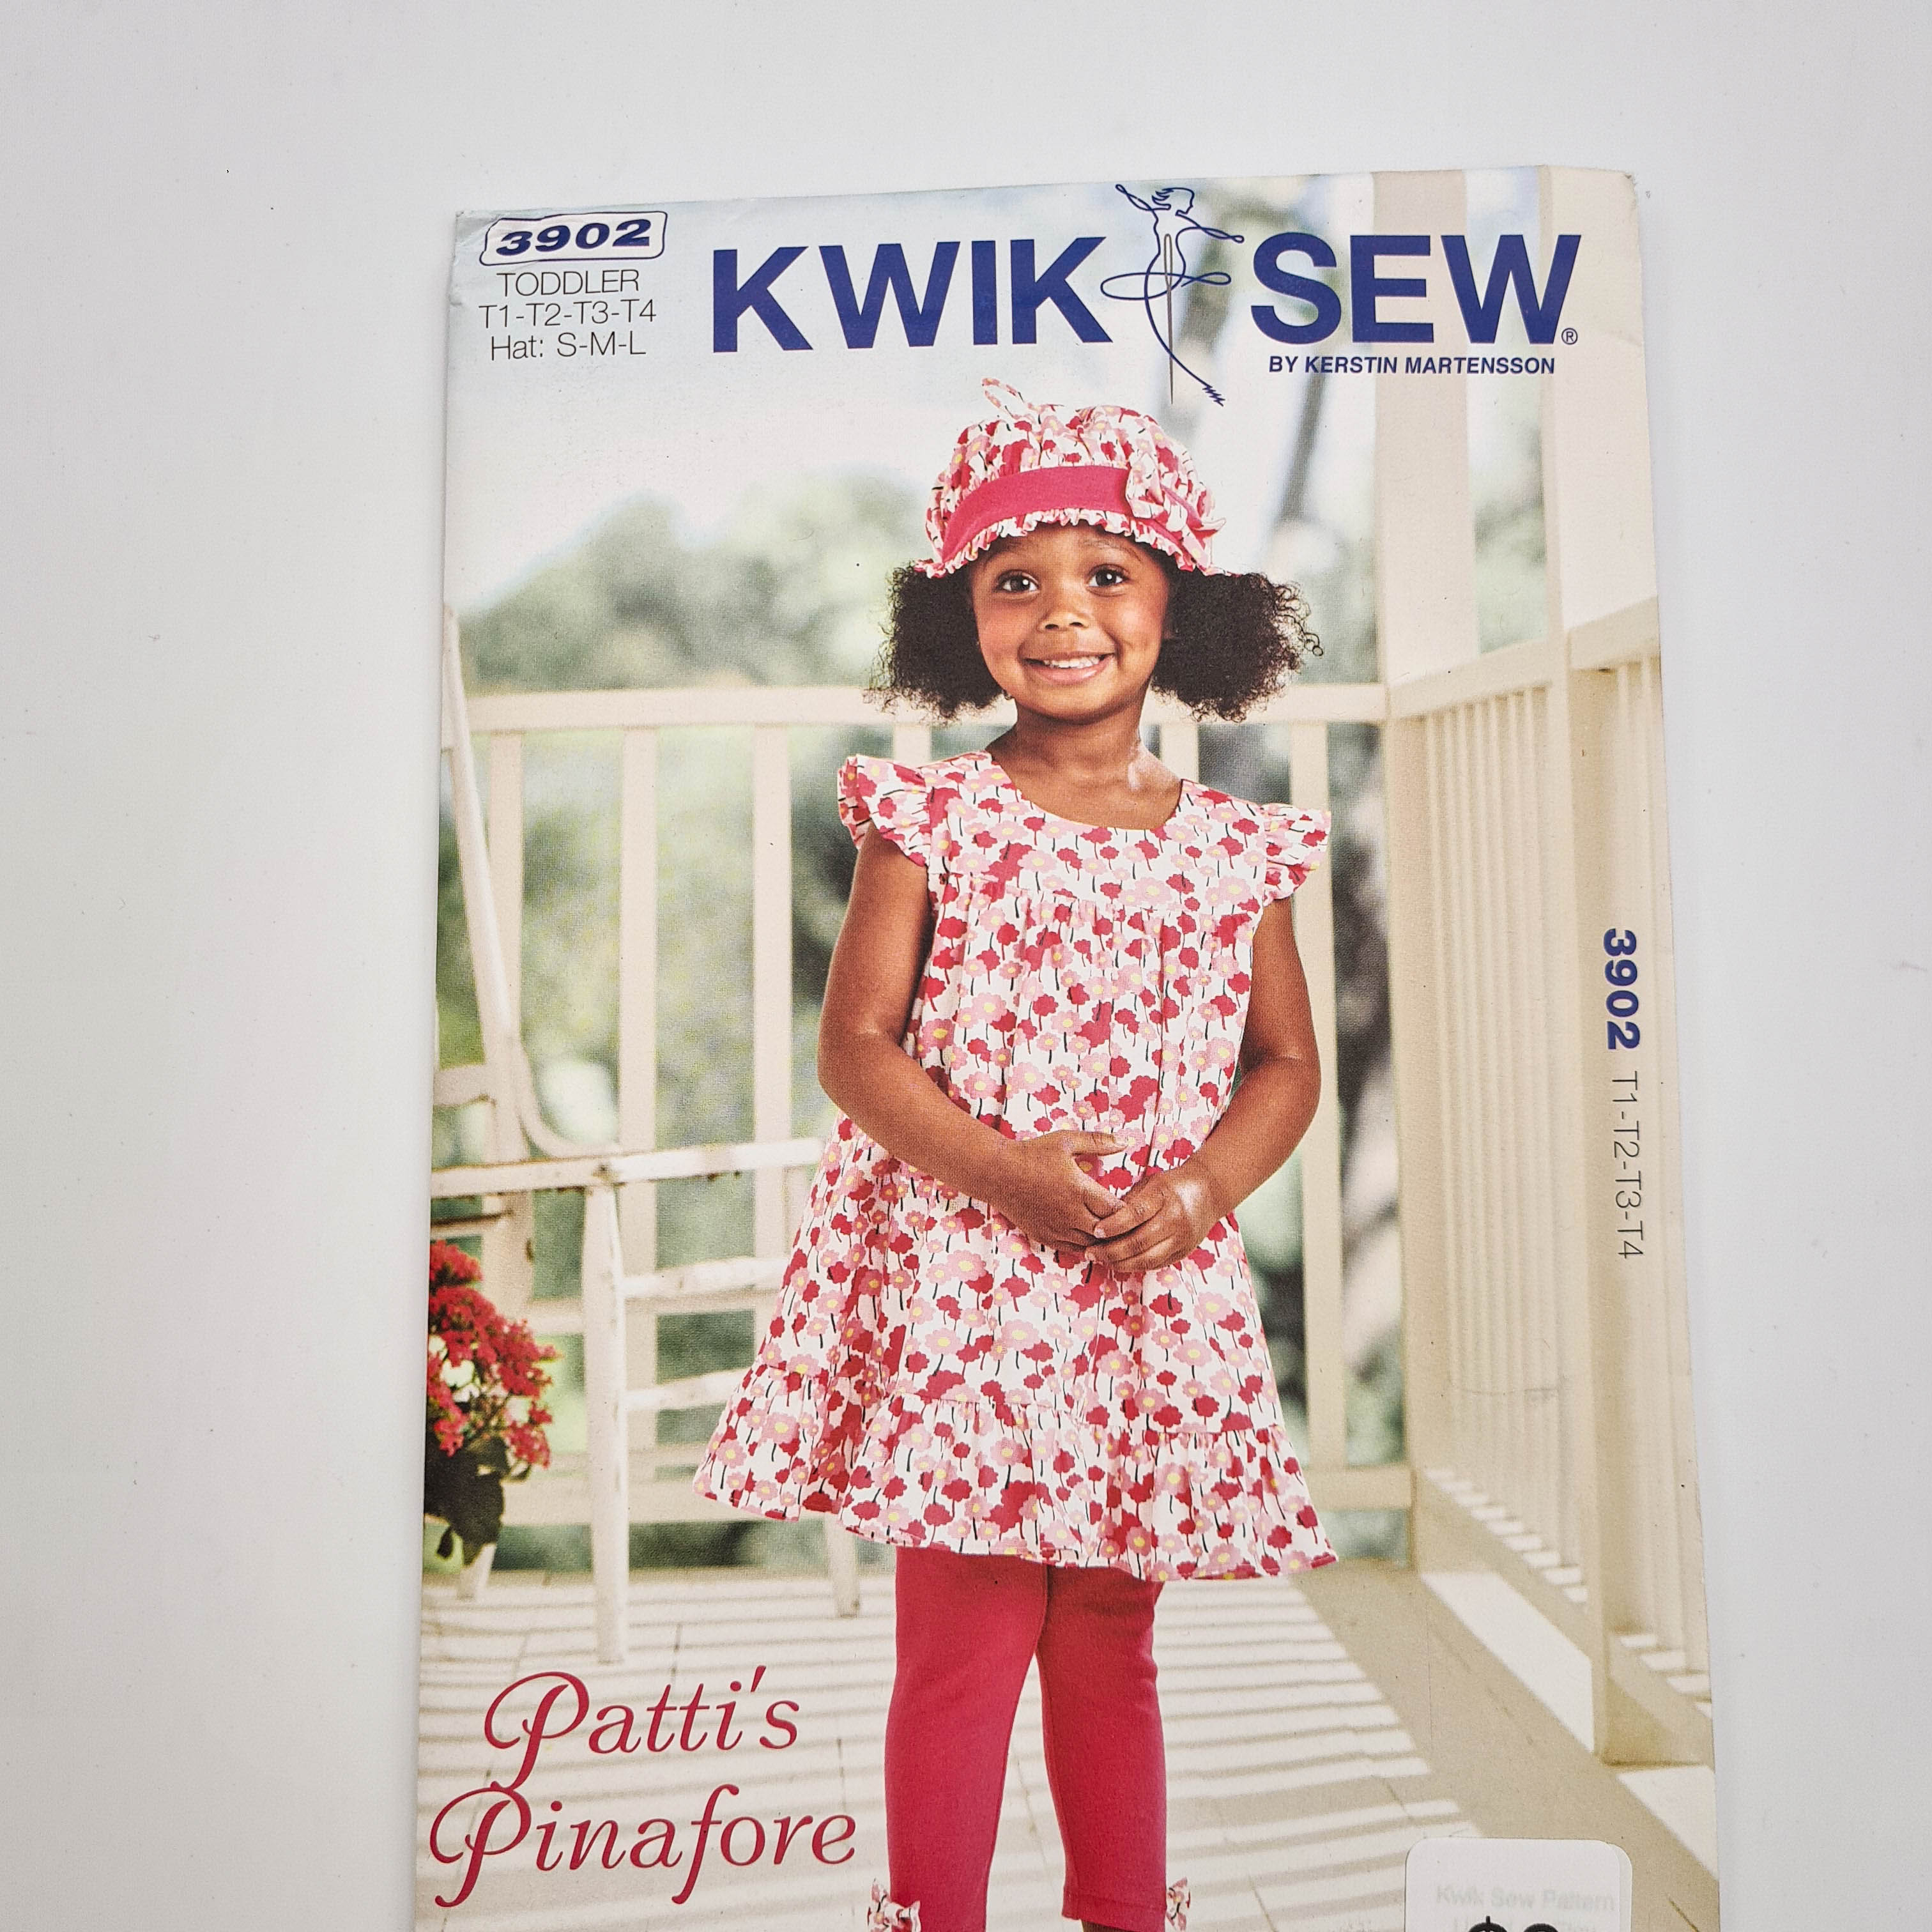 Kwik Sew Method for Easy Sewing